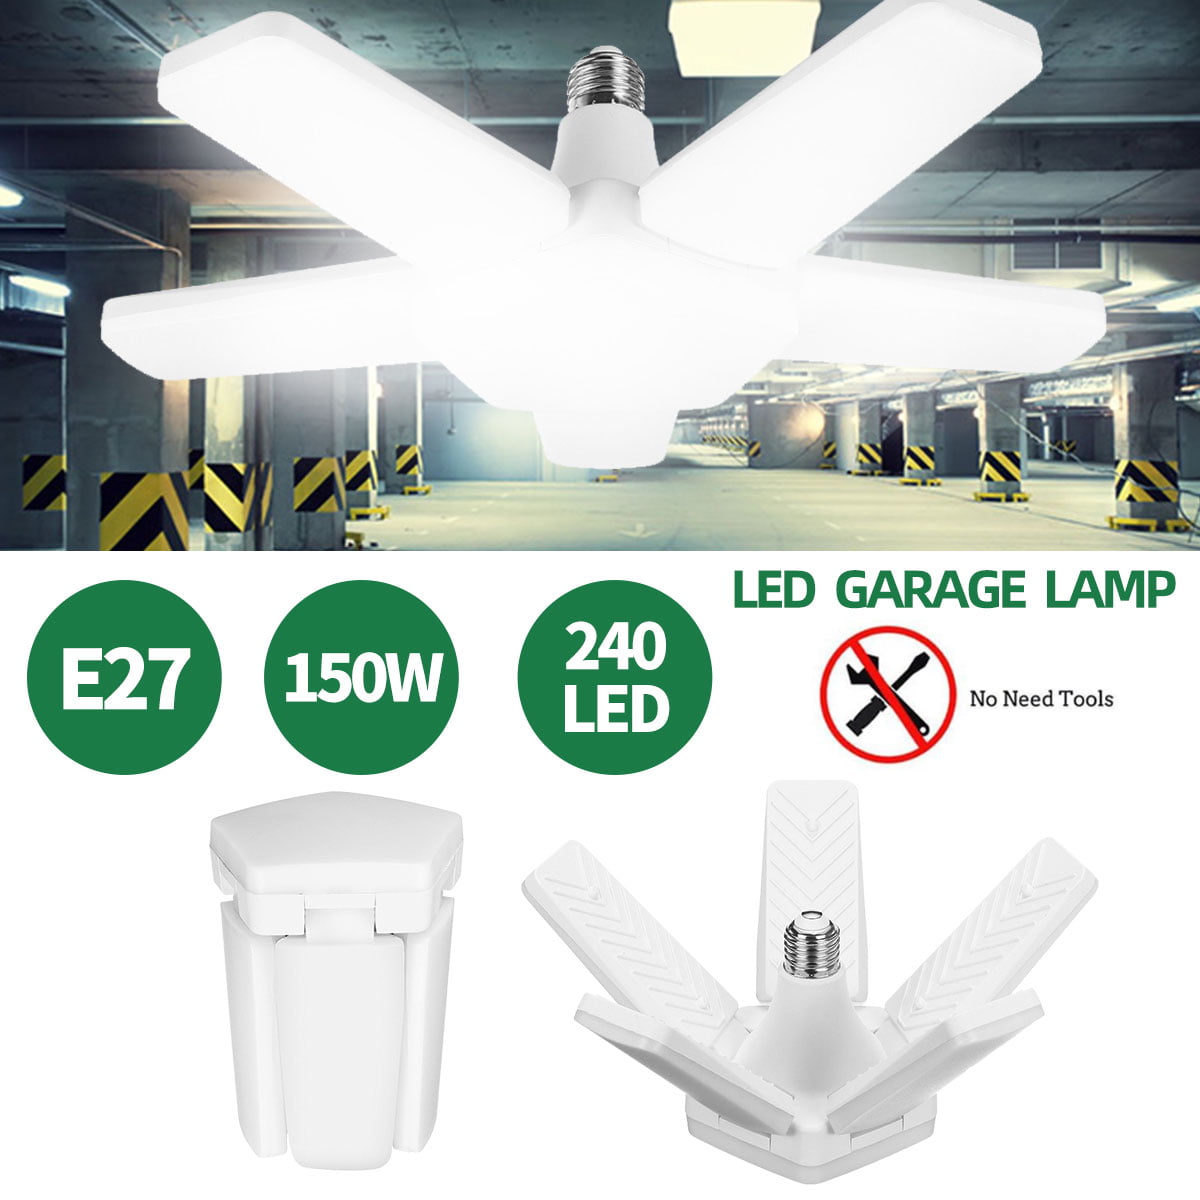 Details about   60W 20000lm E27 LED Garage Shop Work Lights Home Ceiling Fixture Deformable Lamp 